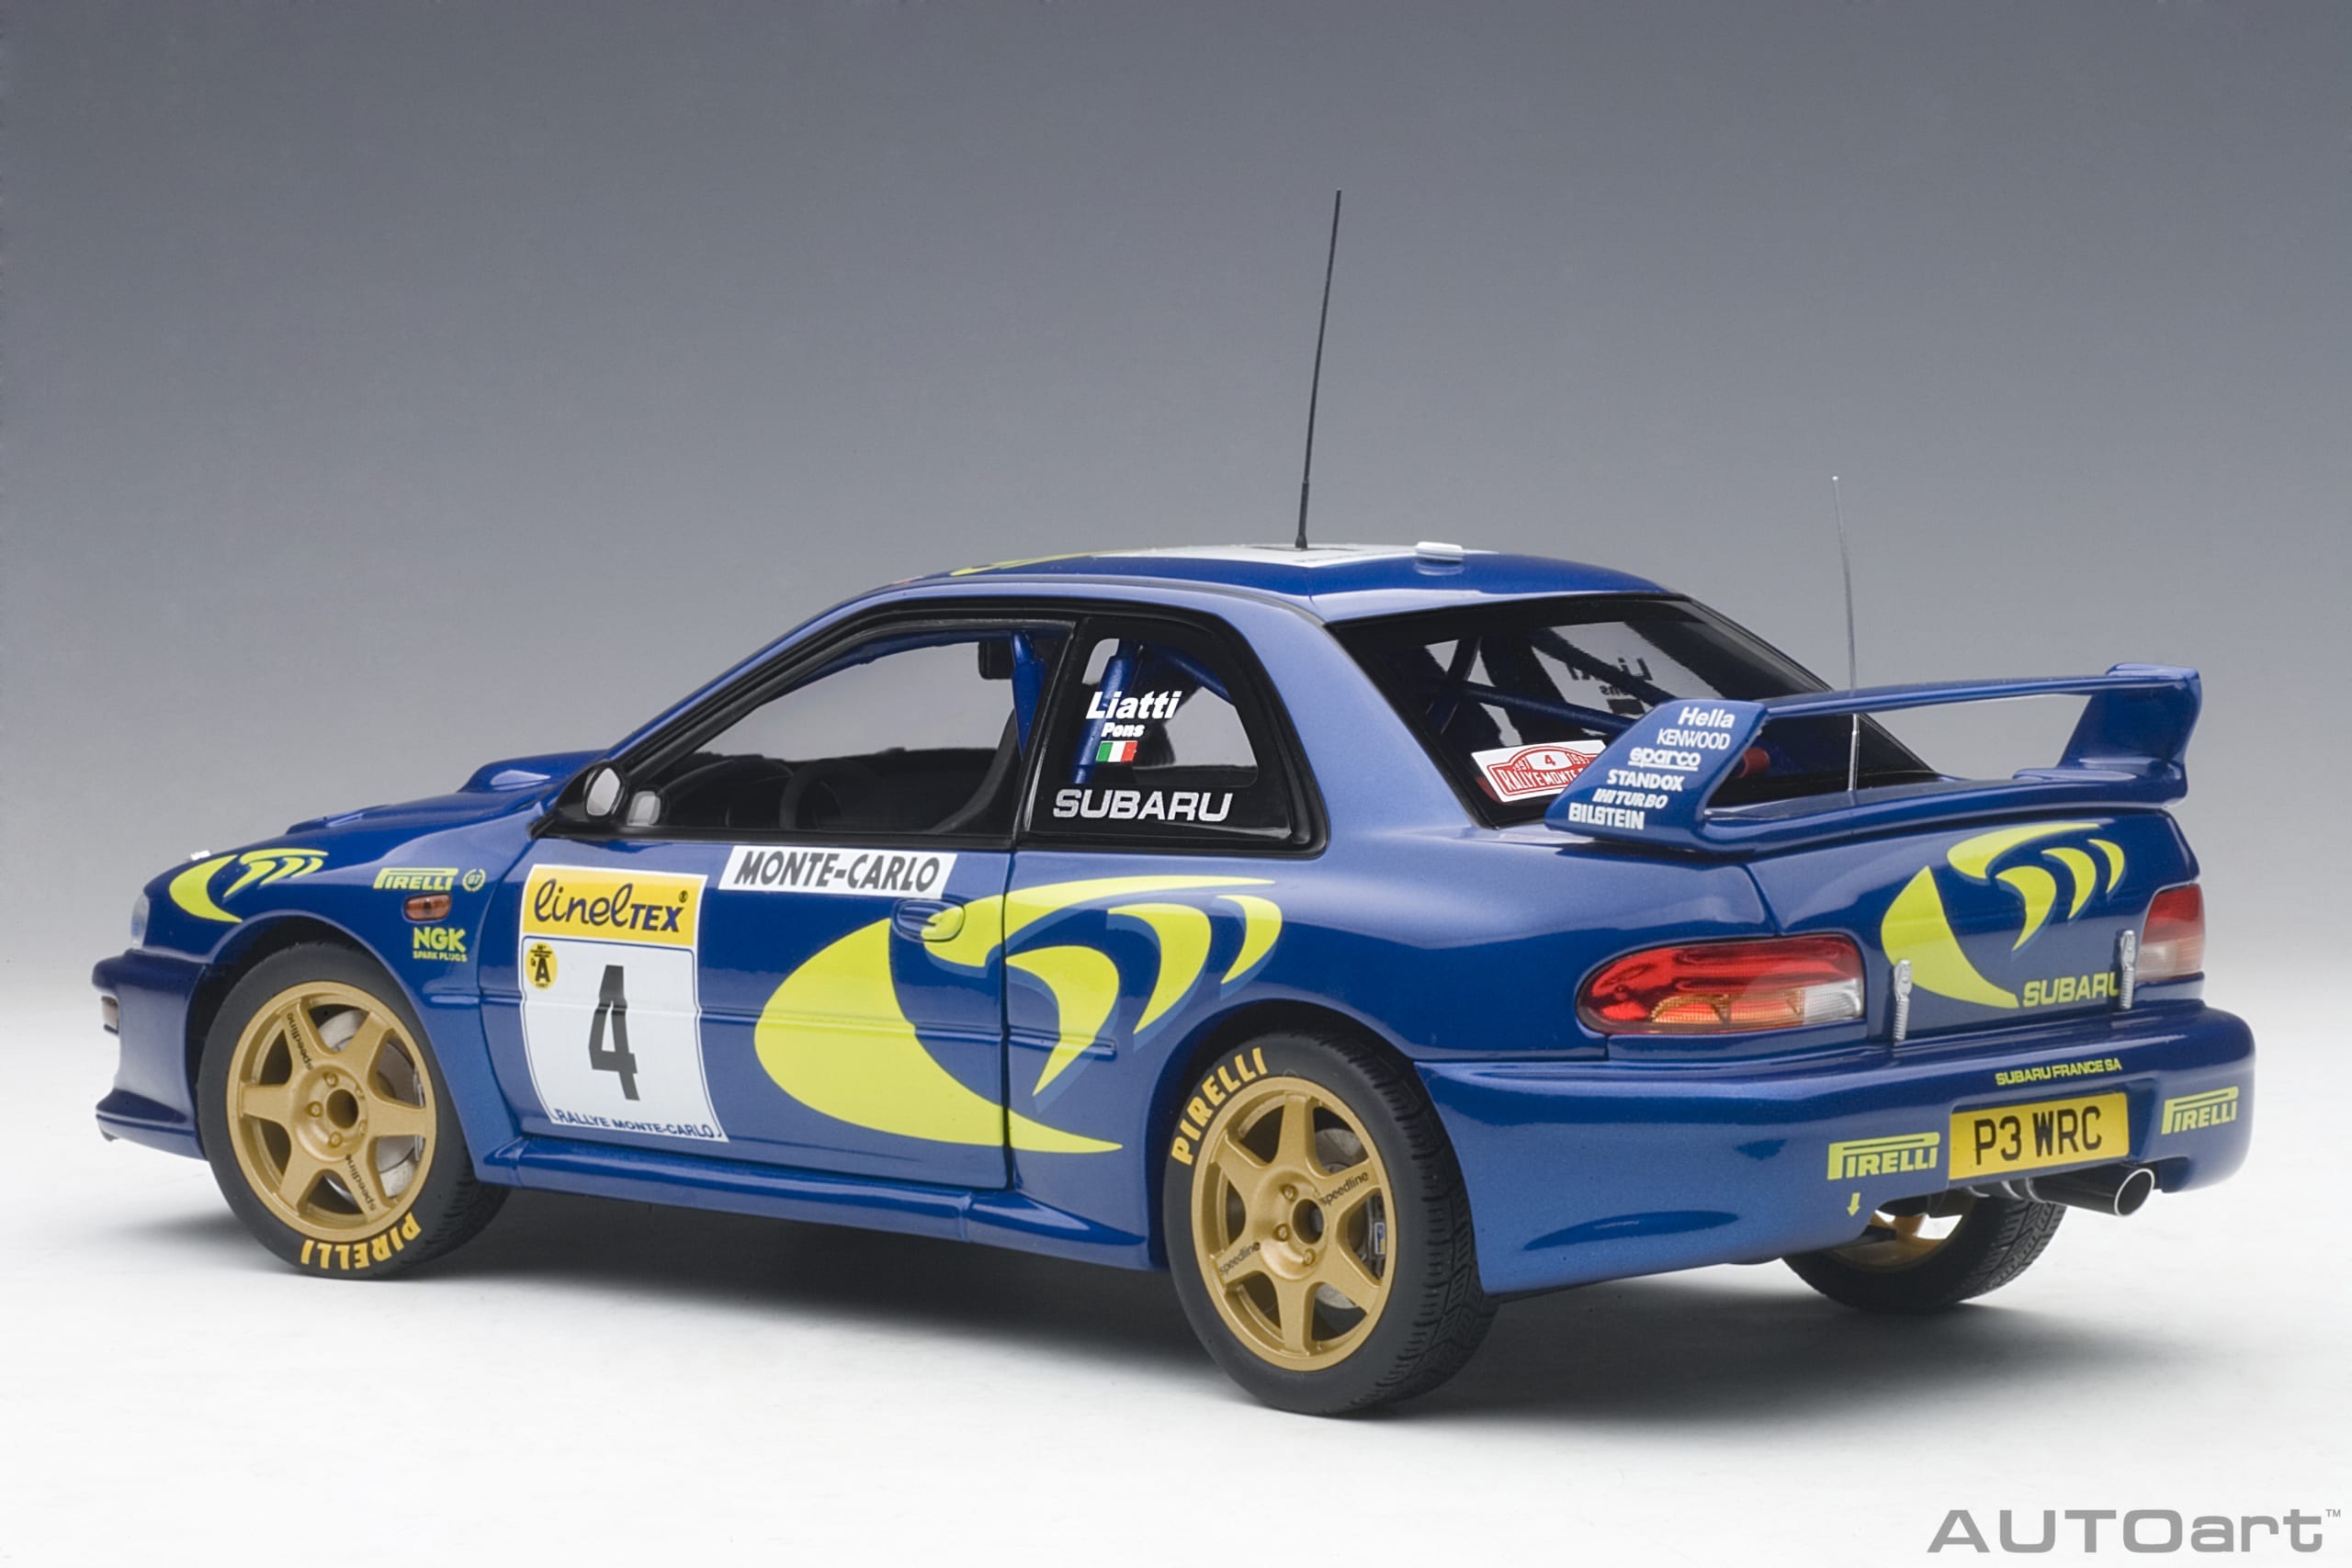 1/43 Subaru Impreza WRC Rallye Monte Carlo 1997 Liatti Pons IXO Altaya